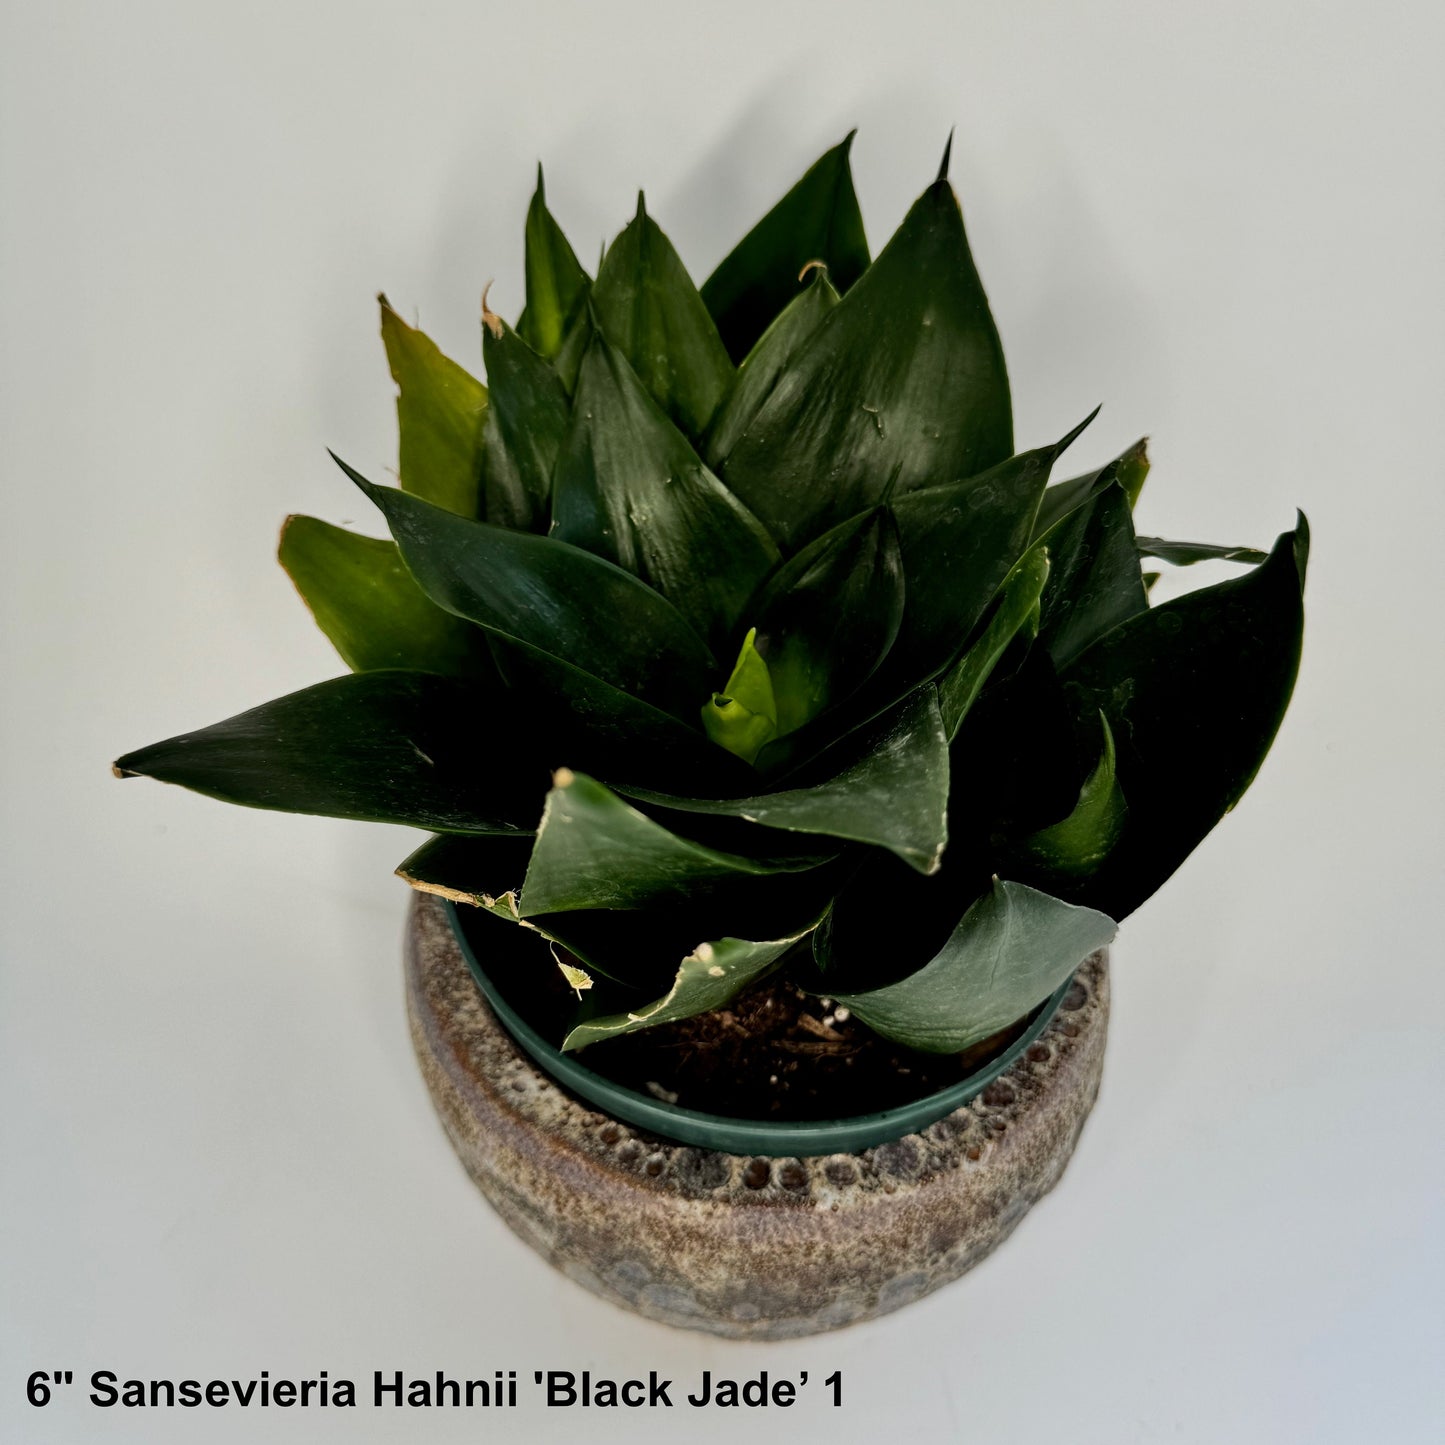 6" Sansevieria Hahnii 'Black Jade’